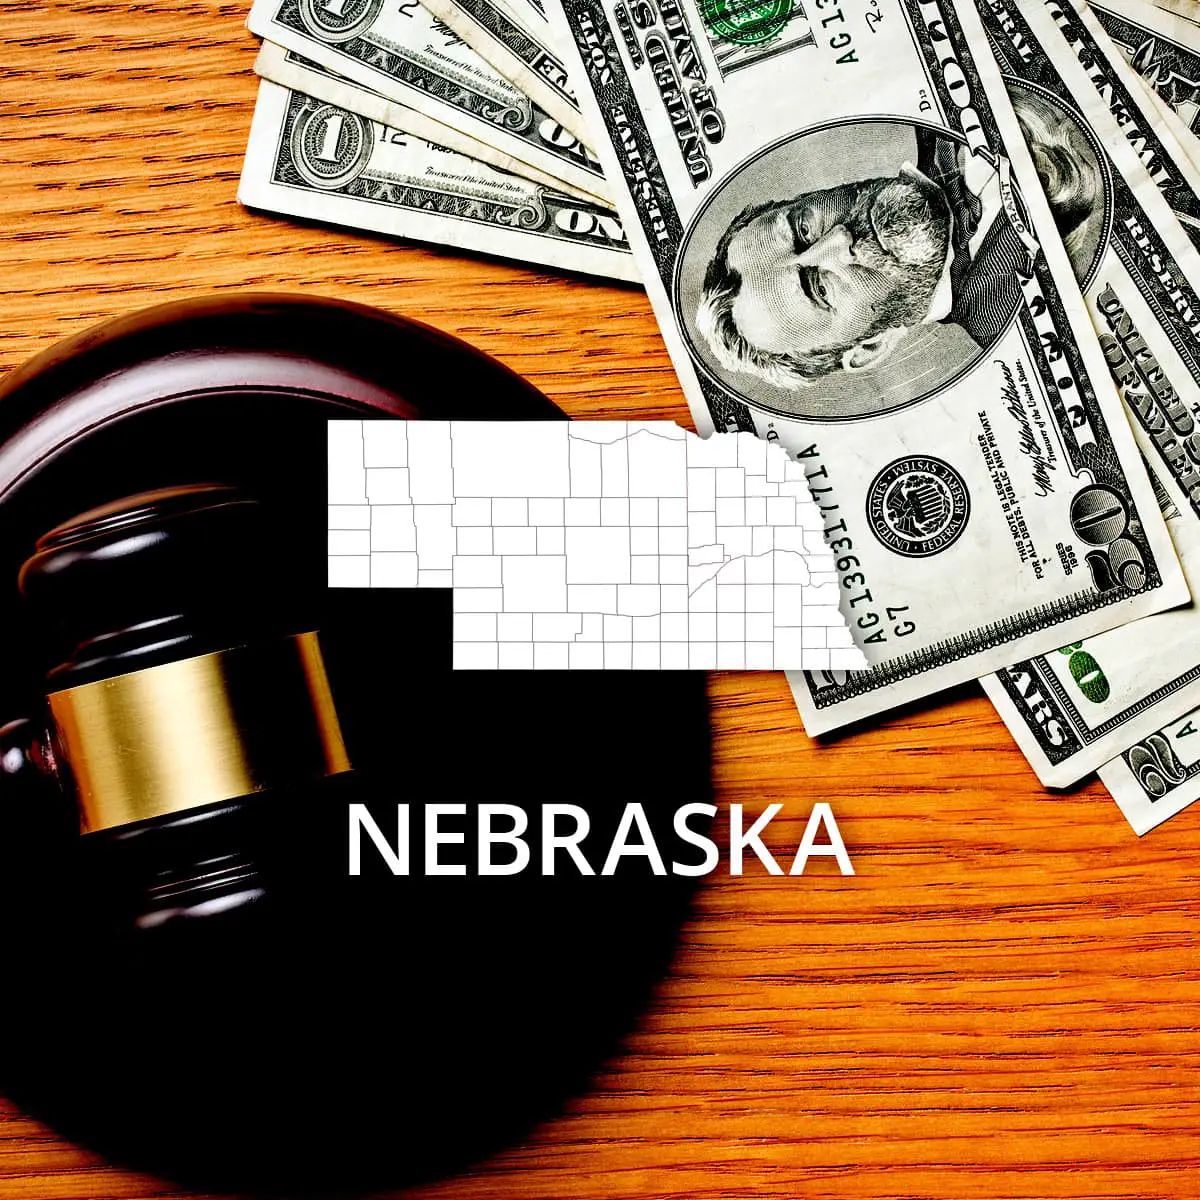 How to File Bankruptcy in Nebraska